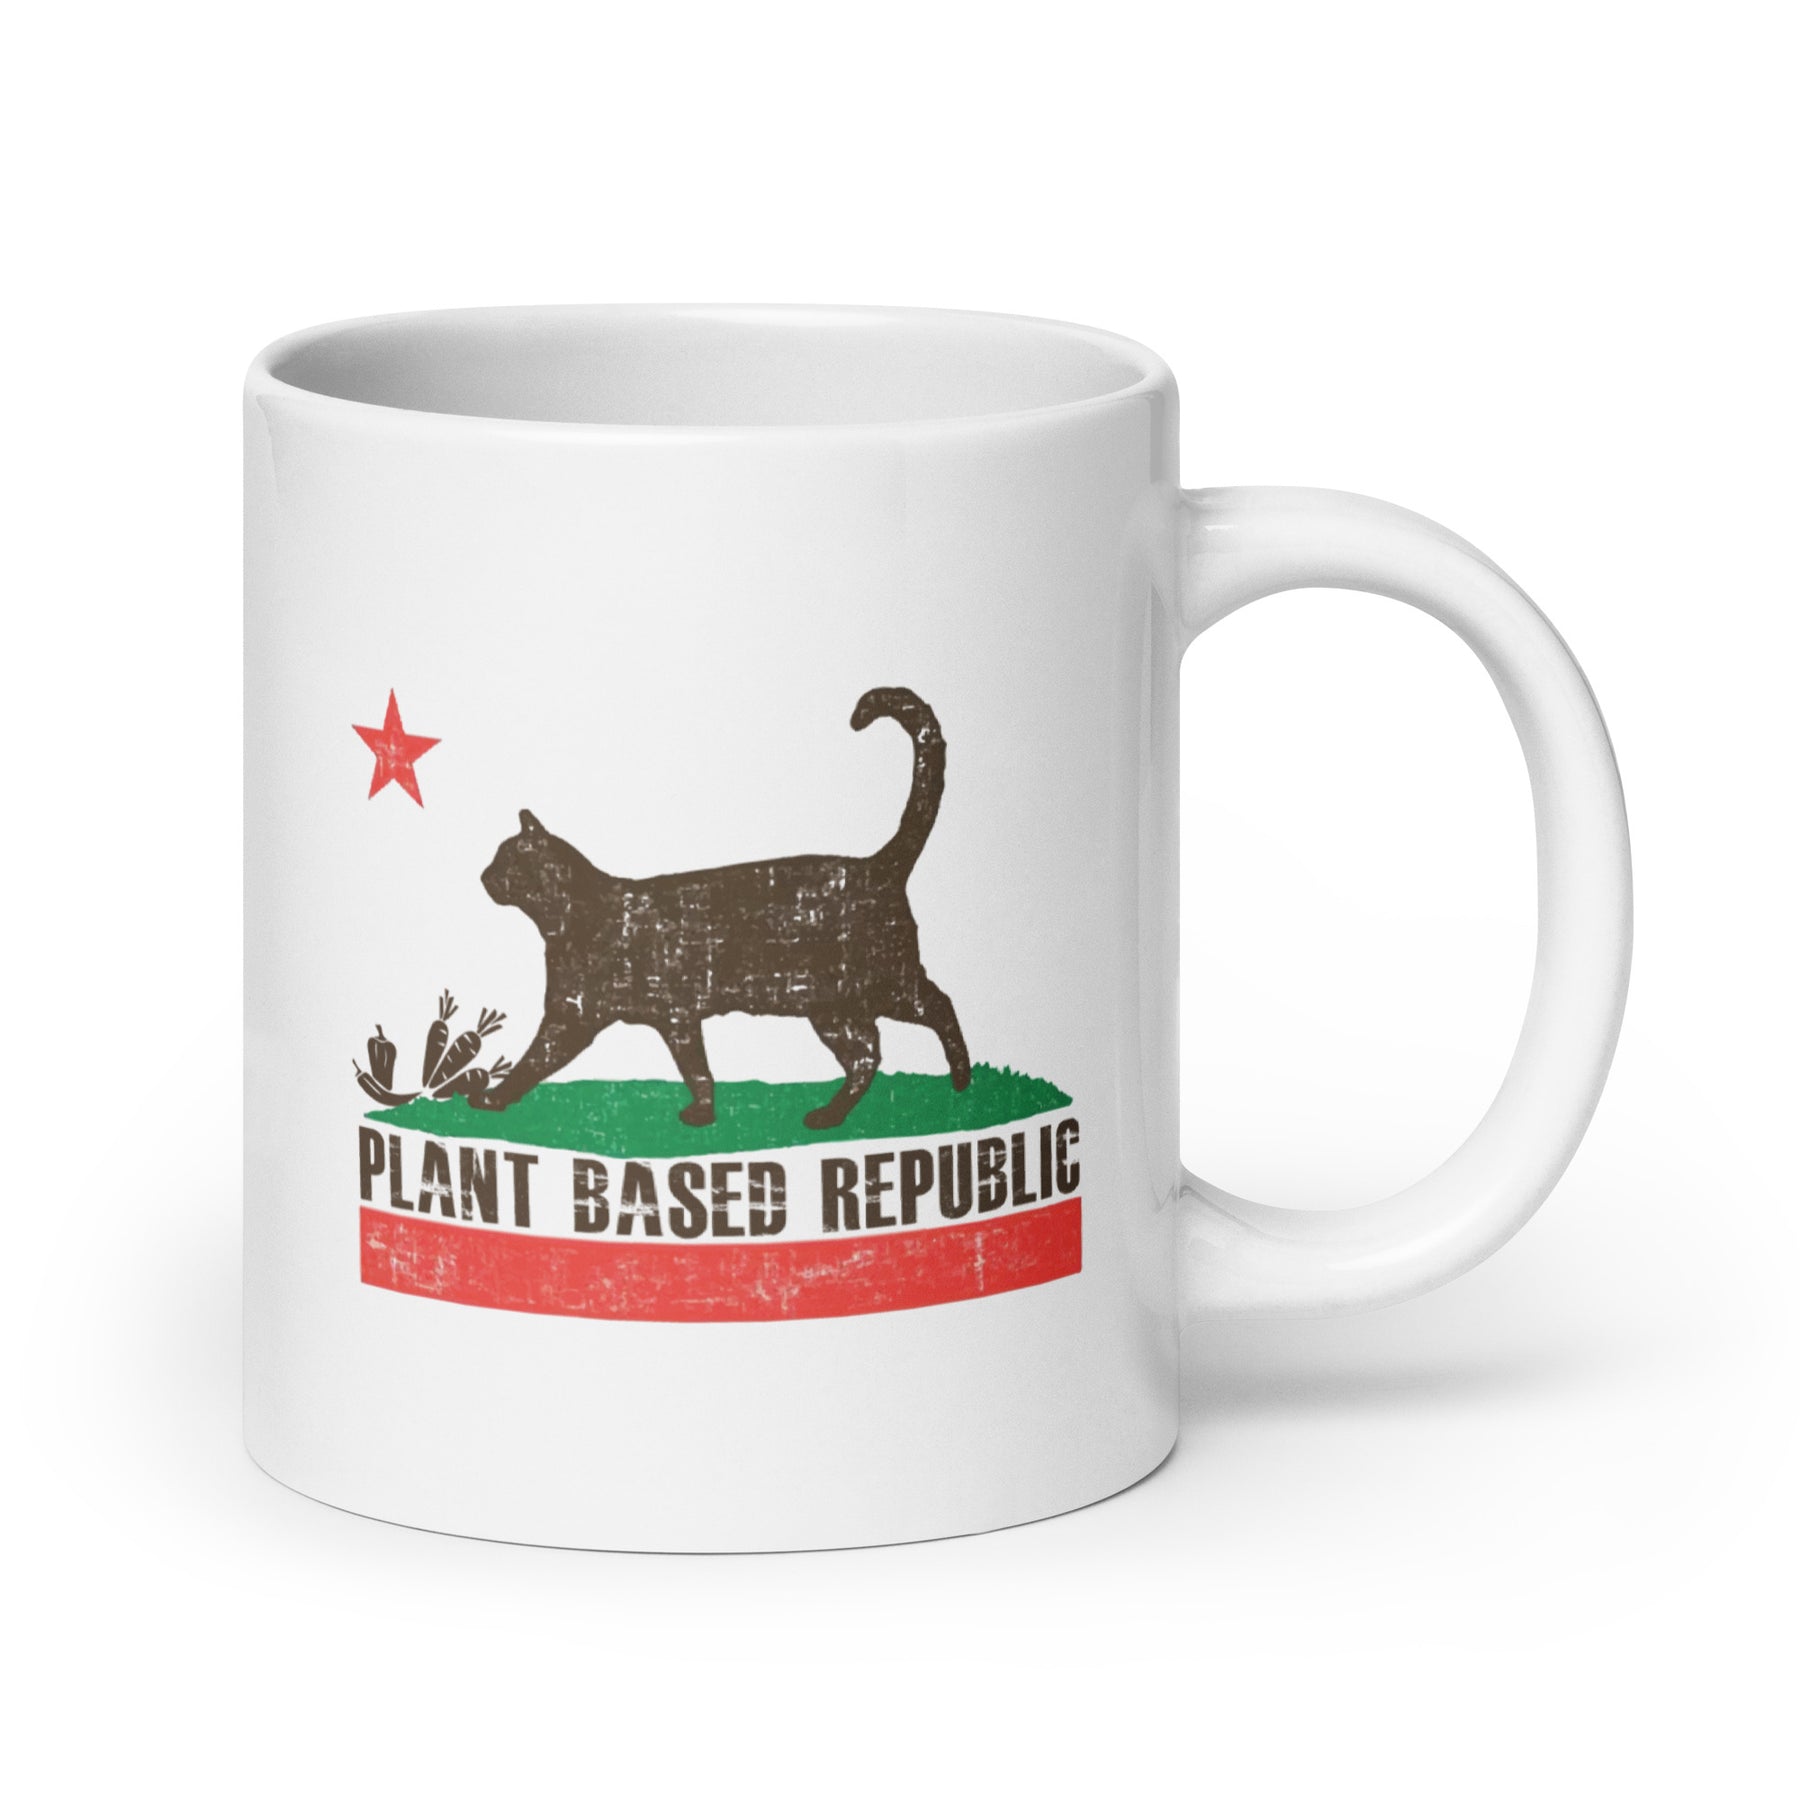 PLANT BASED REPUBLIC White glossy mug